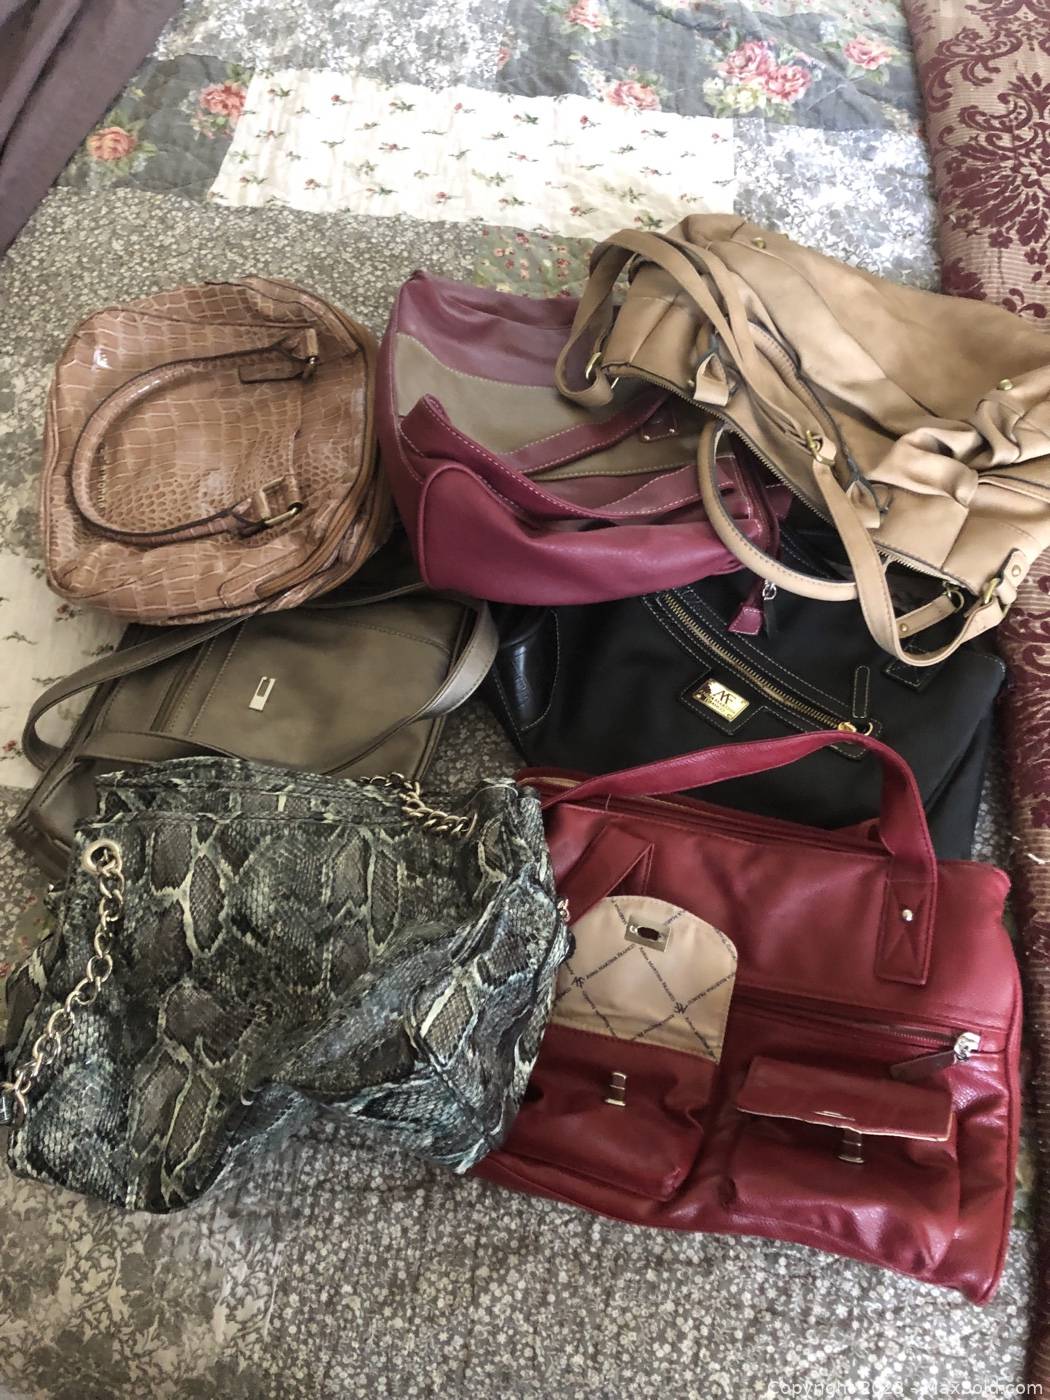 Buy Ayliss Hippie Suede Fringe Tassel Messenger Bag Women Hobo Shoulder Bags  Crossbody Handbag,Brown at Amazon.in